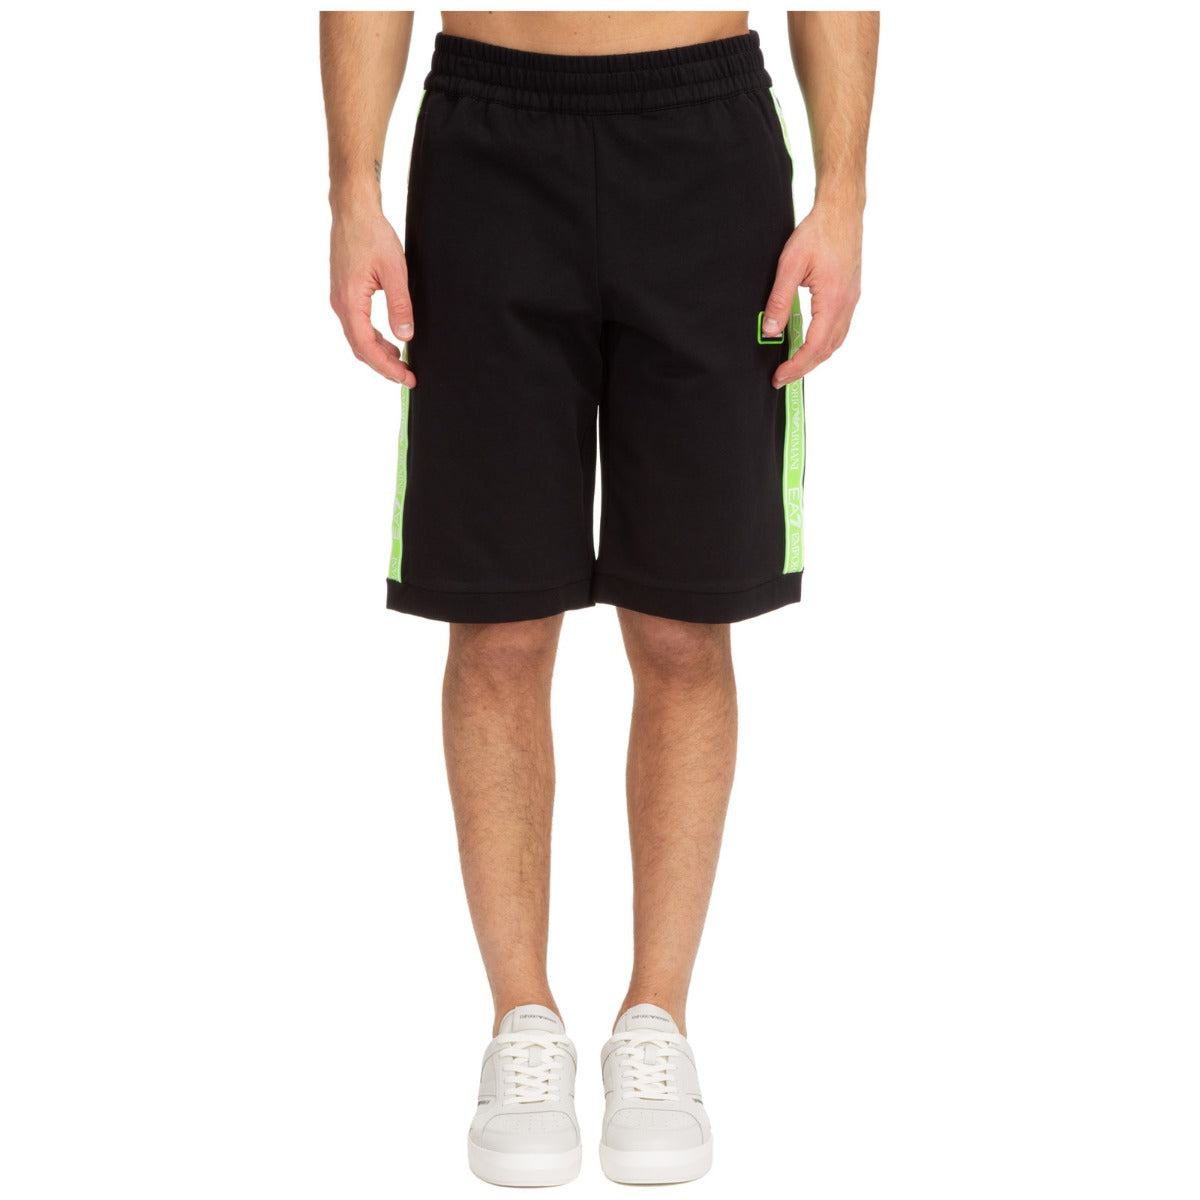 Emporio Armani EA7 Training Shorts - Black/Green